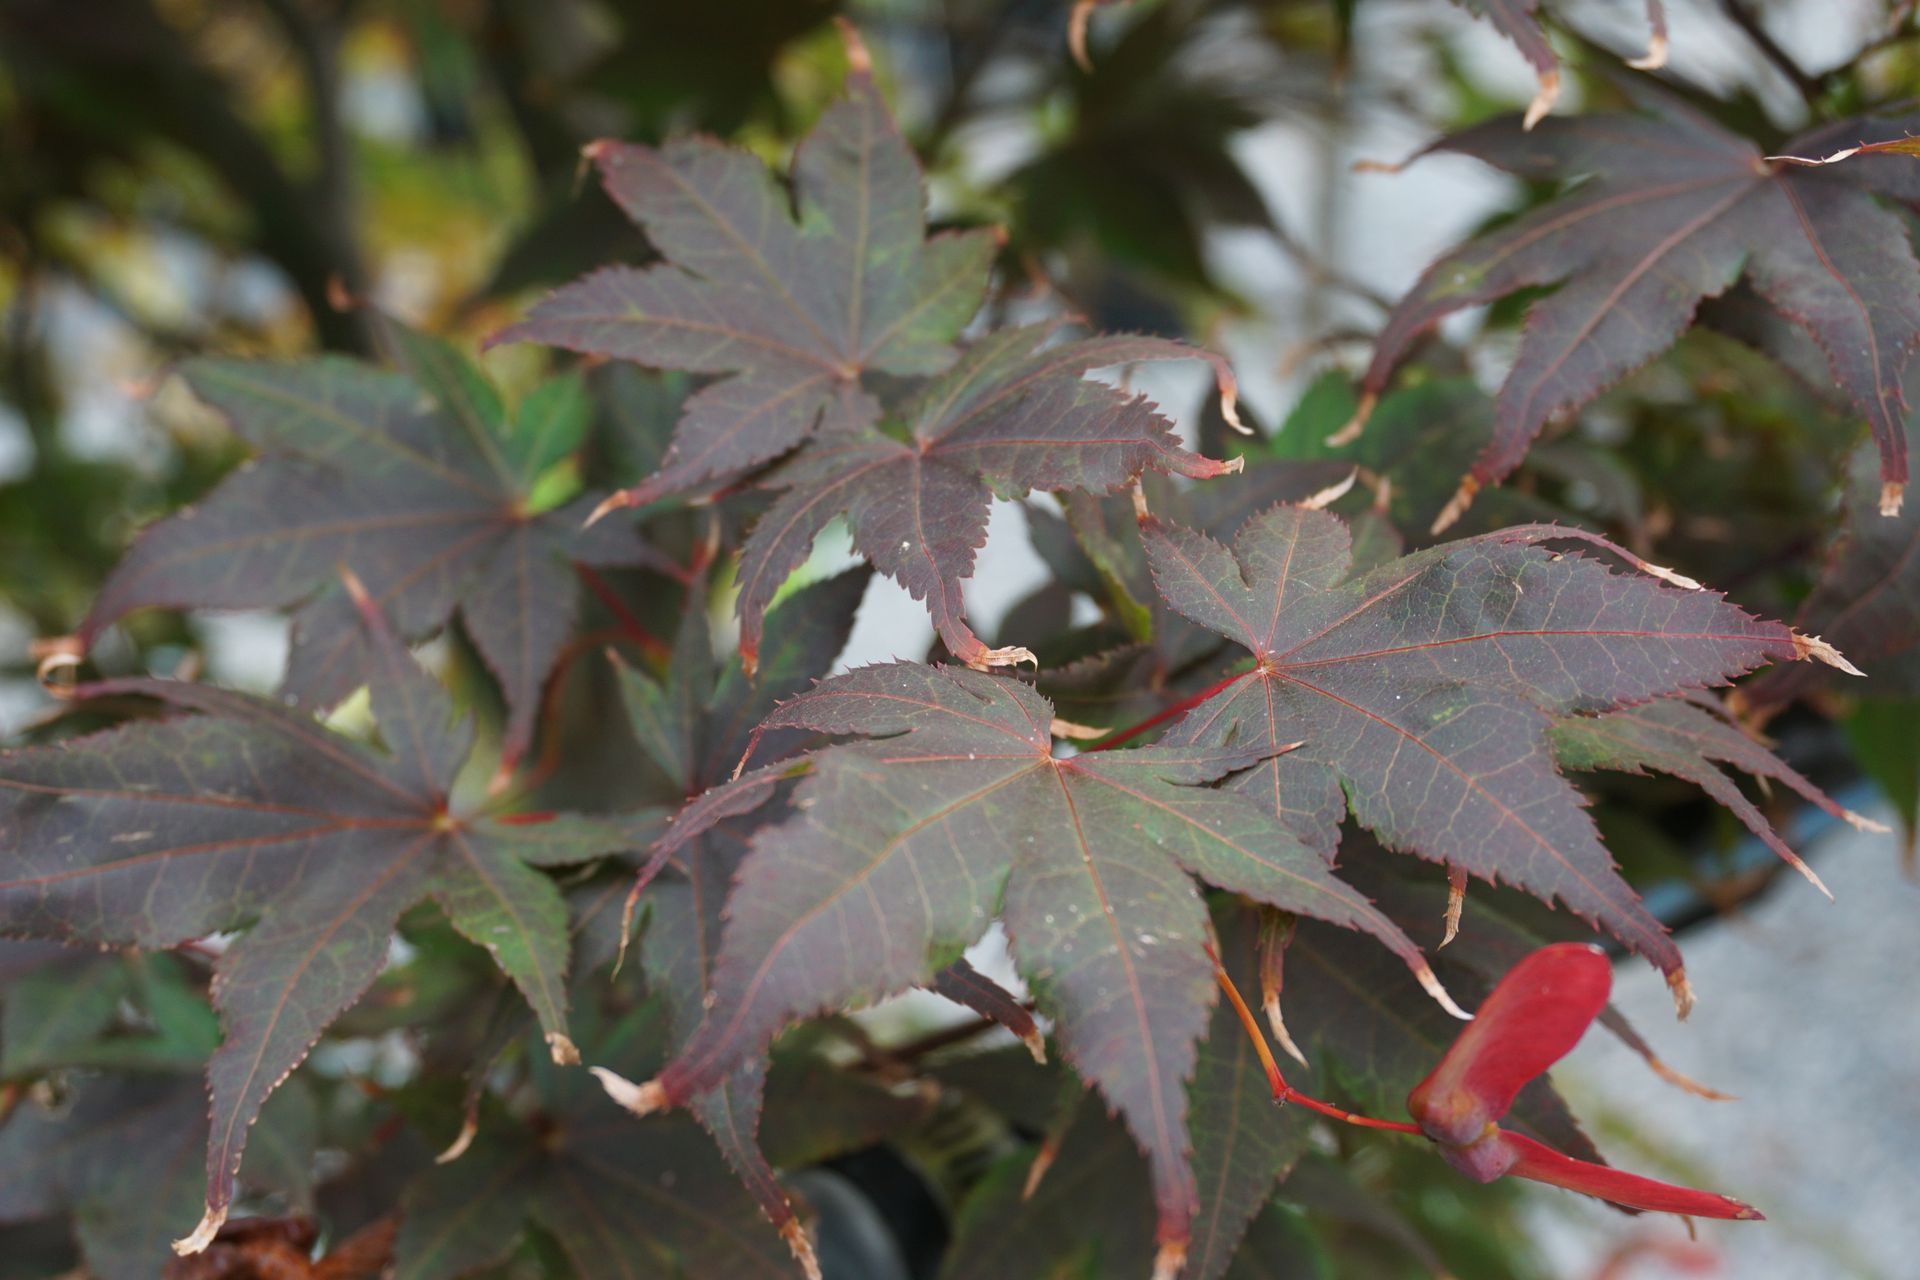 Acer palmatum Bloodgood Japanese Maple Tree for sale in Lebanon